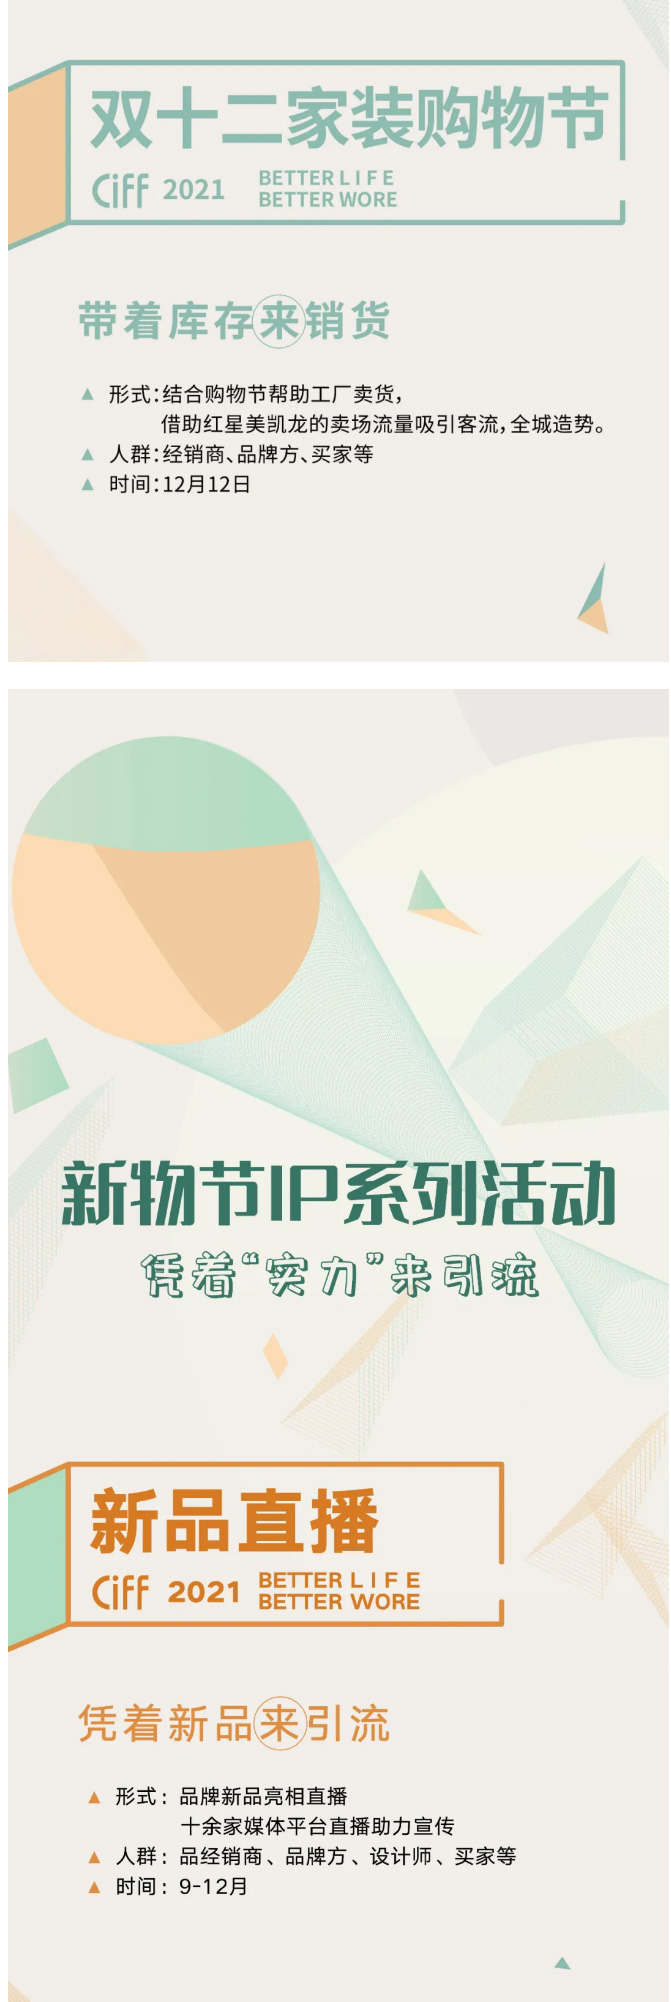 CIFF上海虹桥--增值服务行动方案_03.jpg